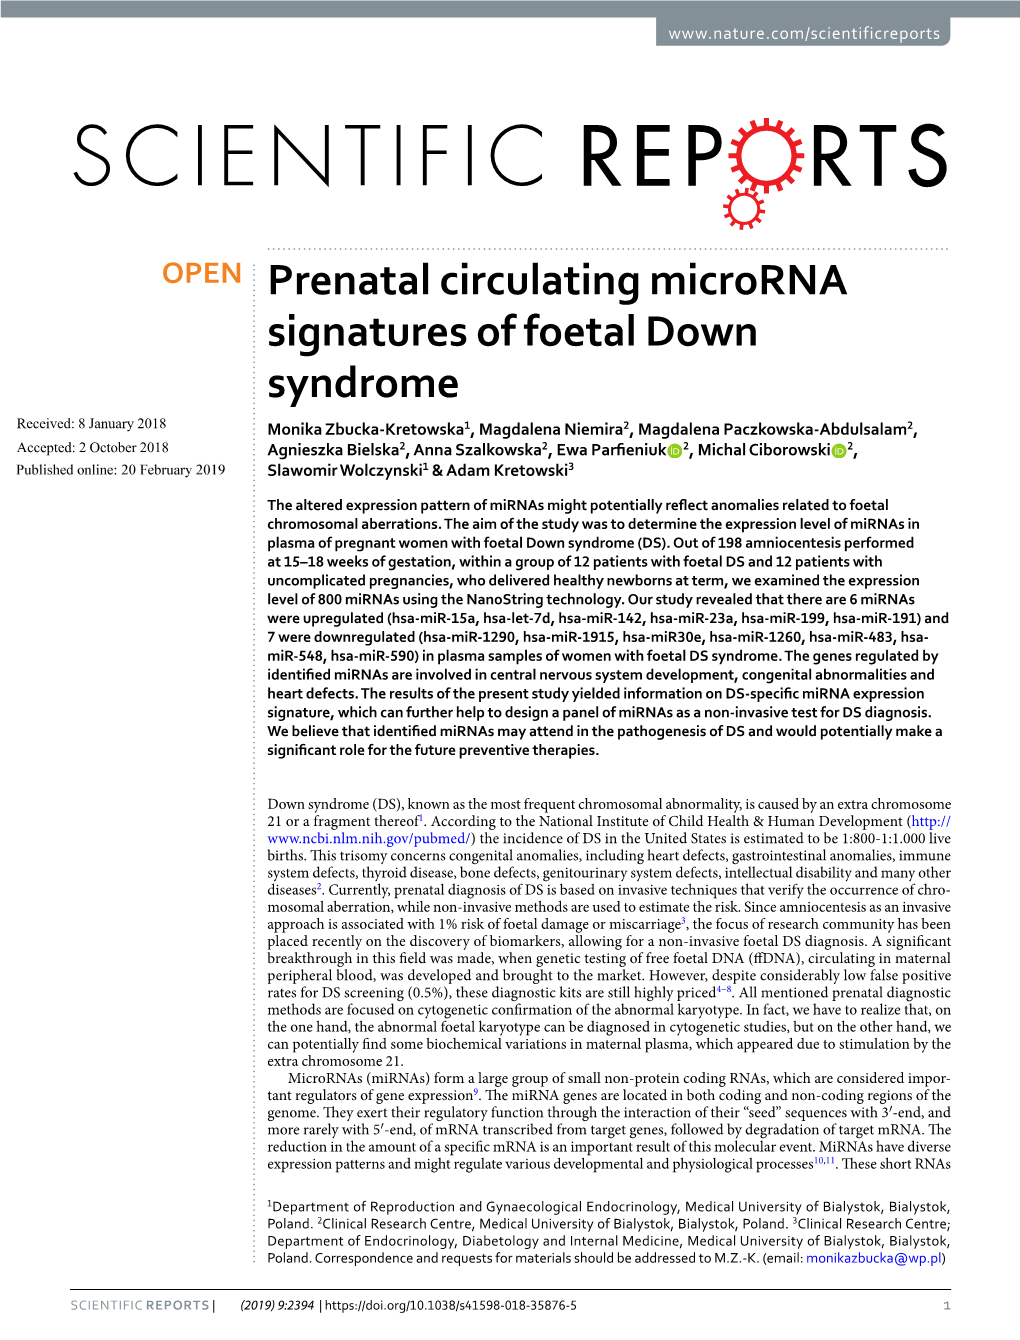 Prenatal Circulating Microrna Signatures of Foetal Down Syndrome